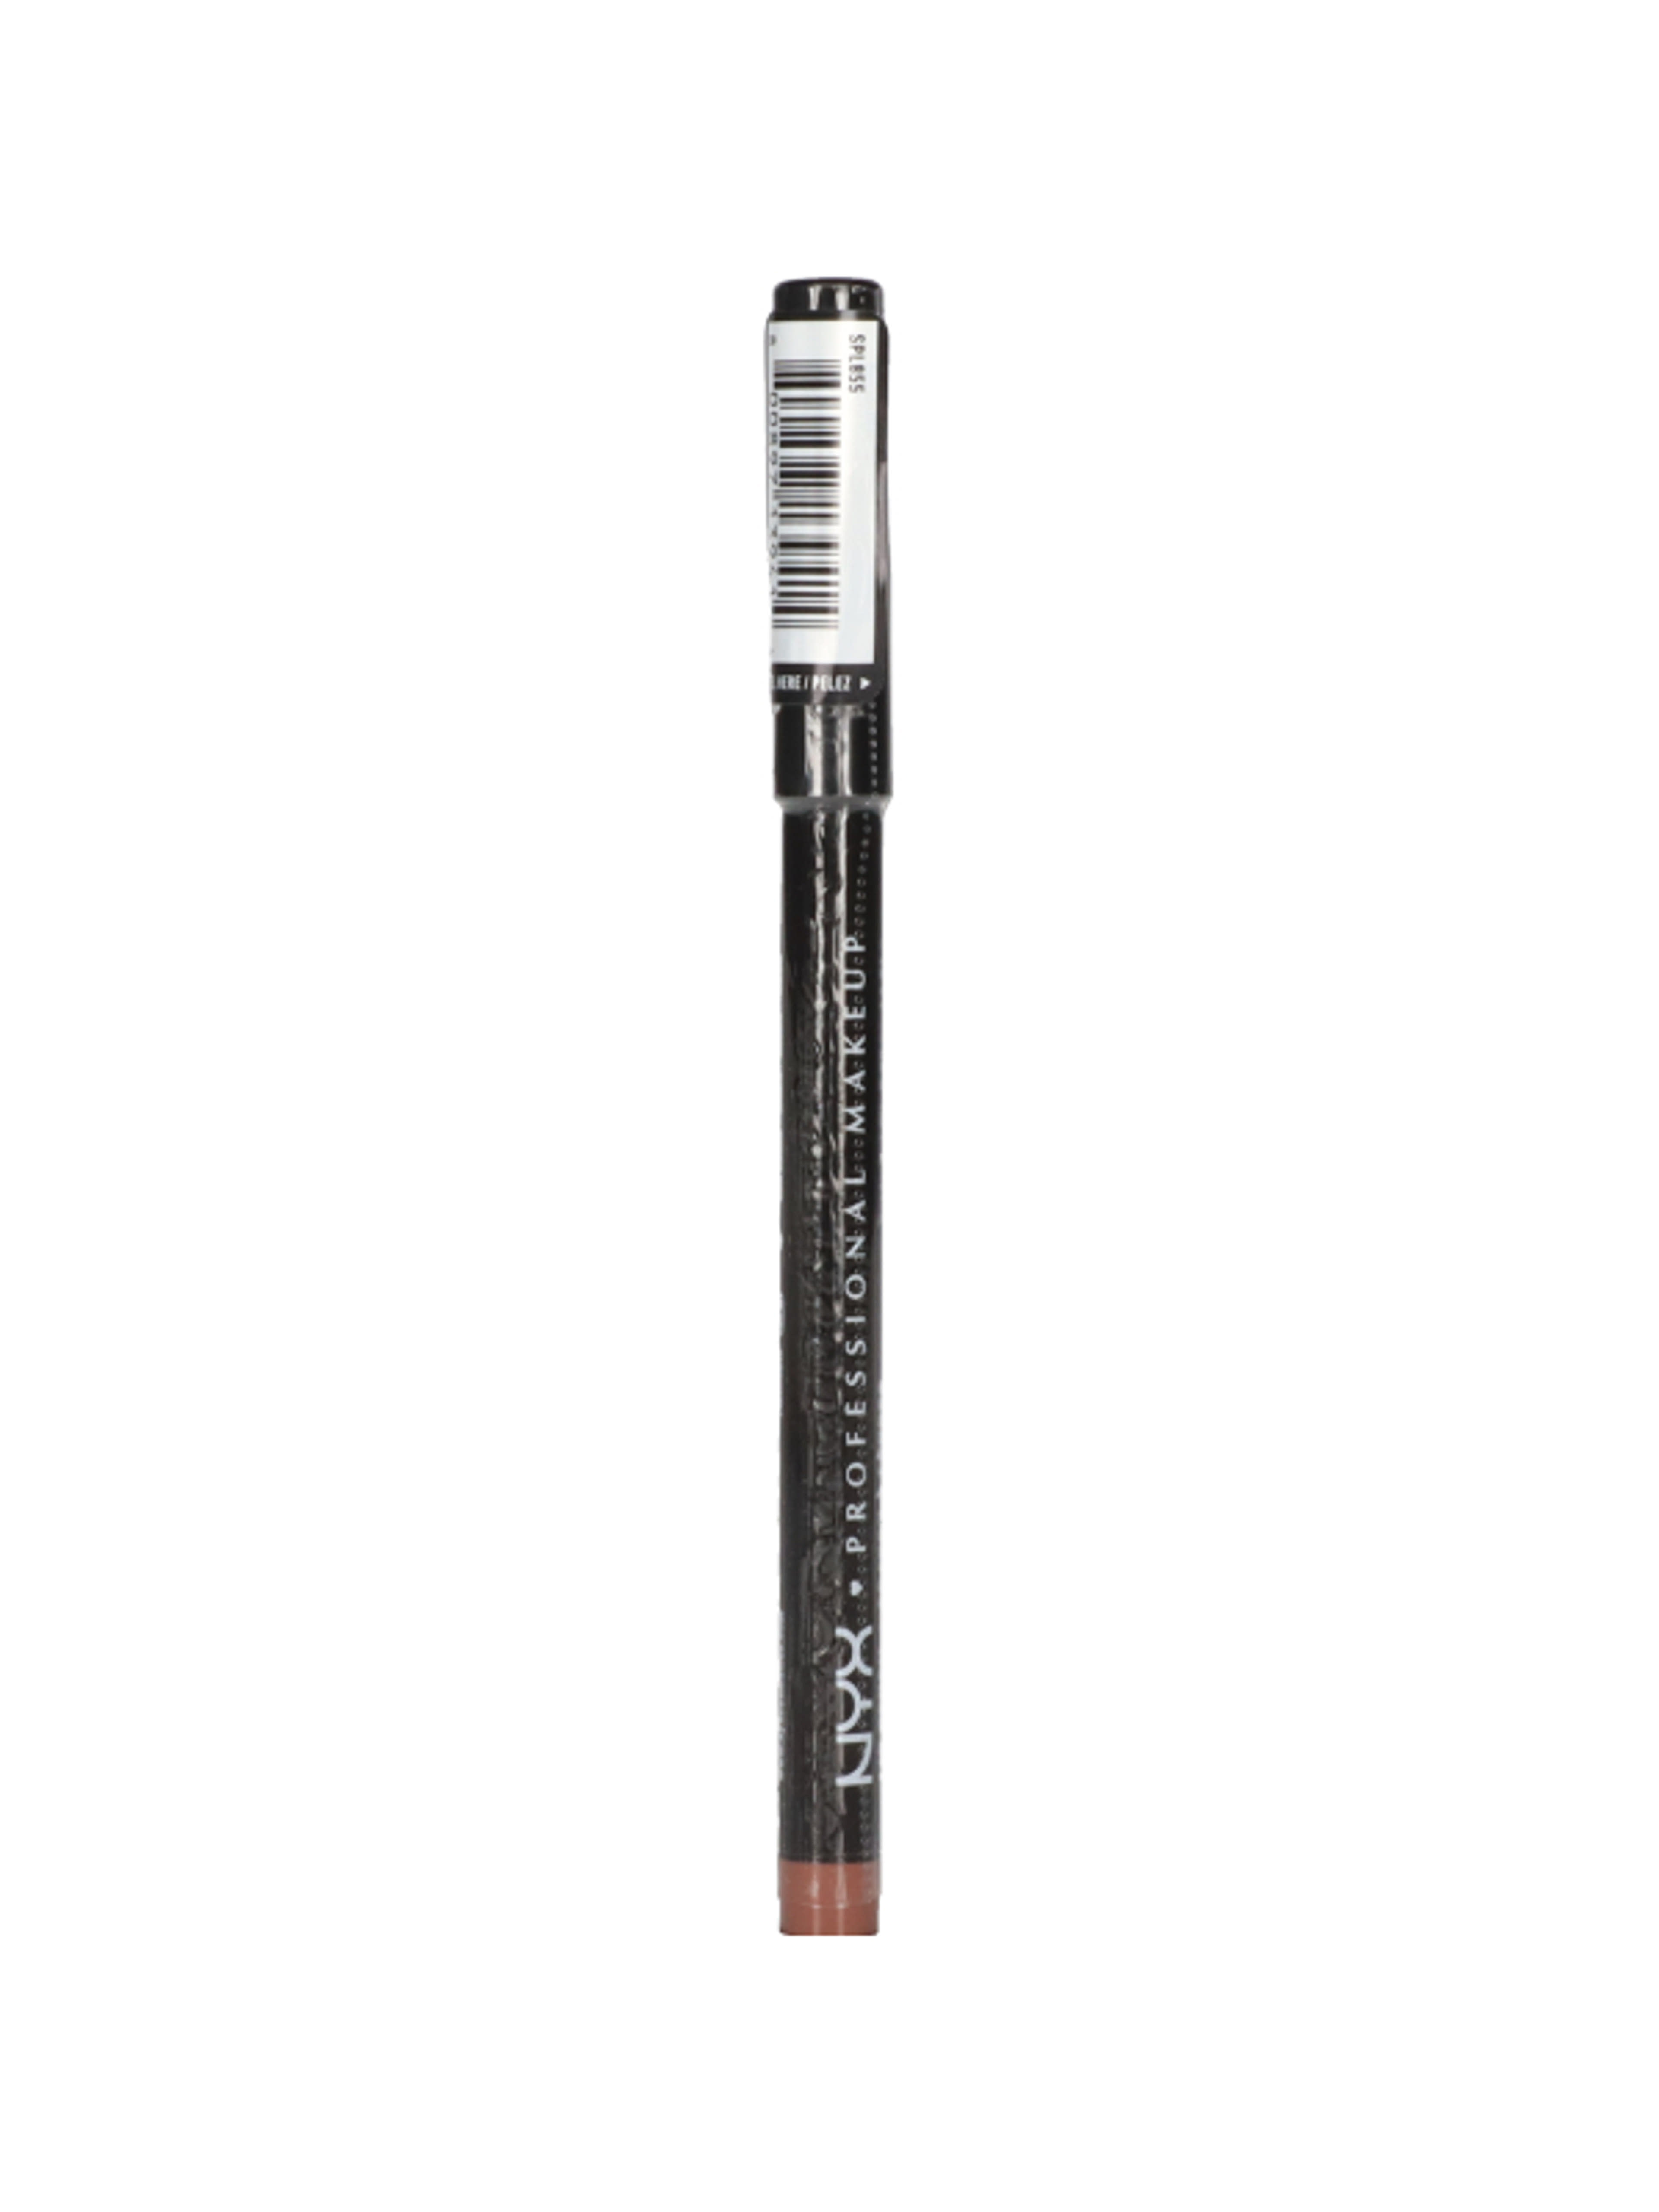 NYX Professional Makeup Slim Lip Pencil ajakkontúr ceruza, Nude Truffle - 1 db-6